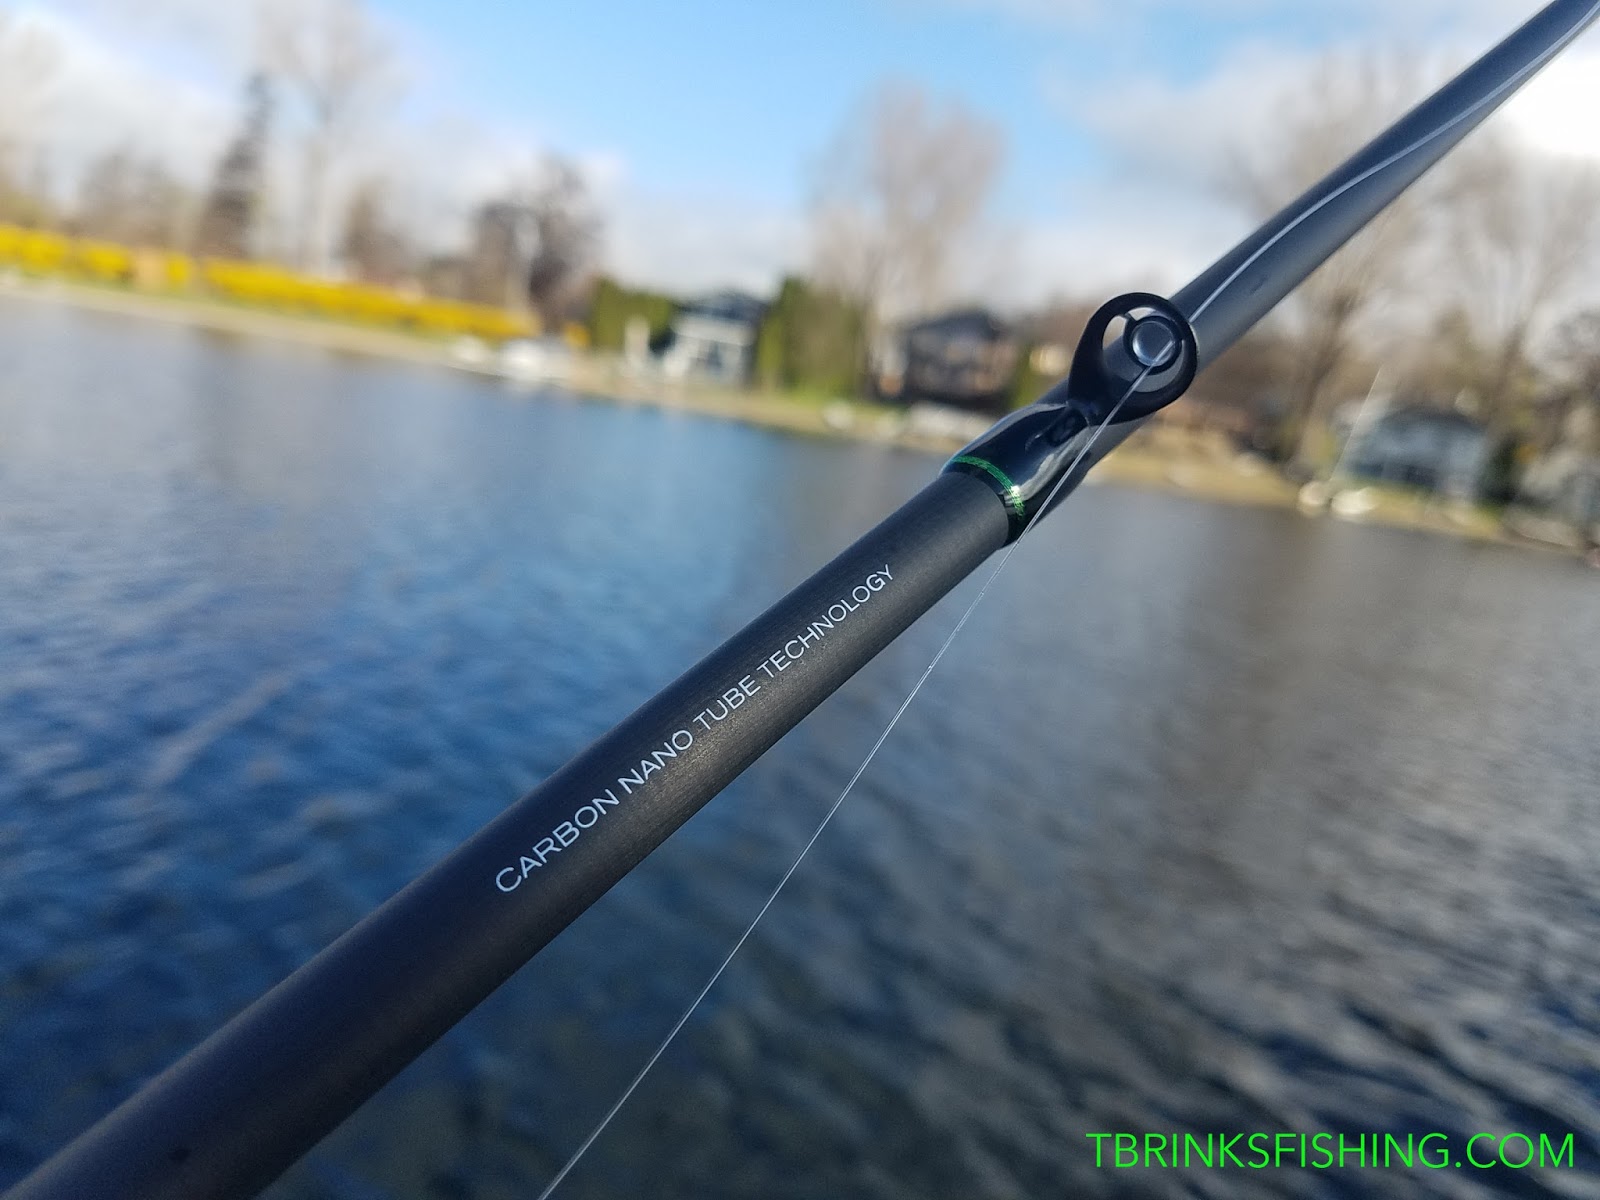 T Brinks Fishing: Lew's Mach Speed Stick Rod Review